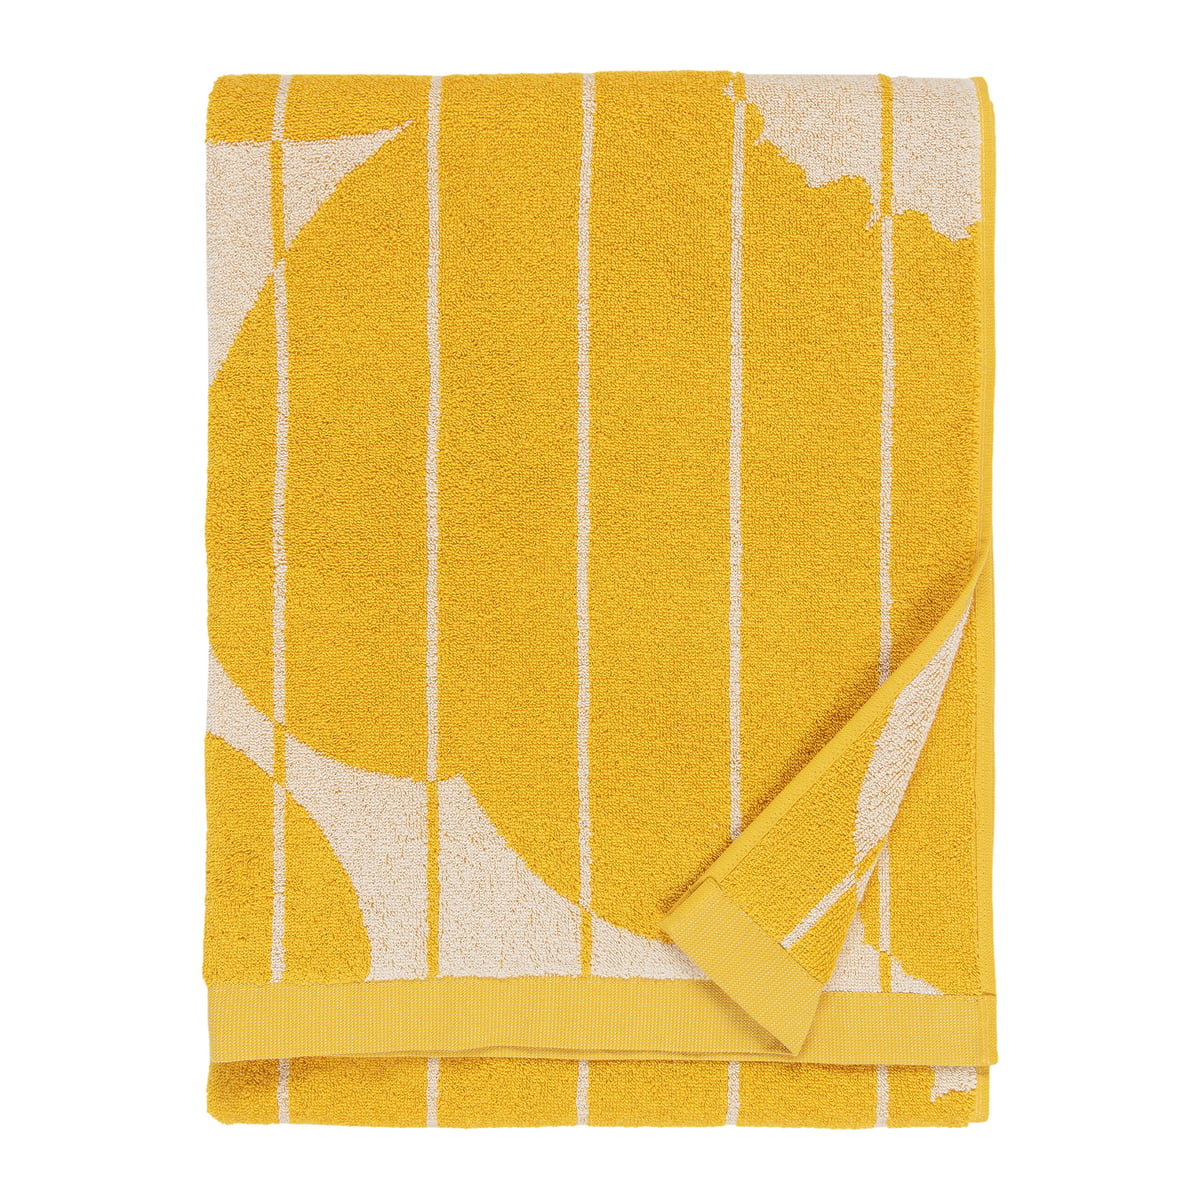 Tea Towel Set of 4 - Ecru/Black/Gray/Yellow